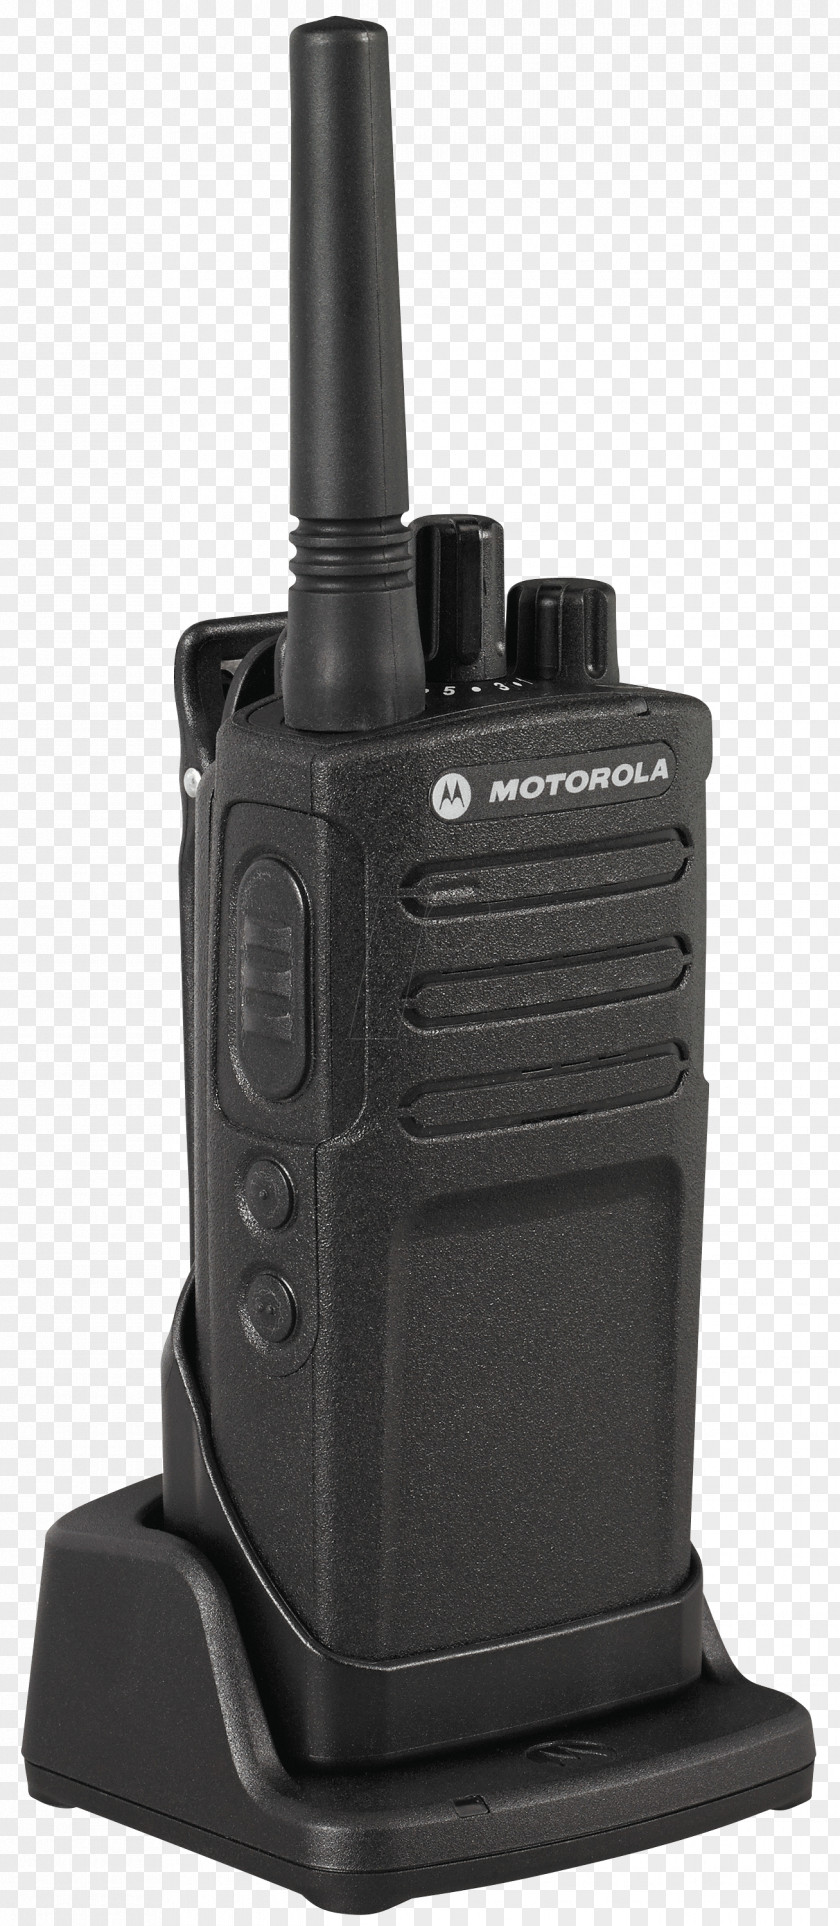 Microphone PMR446 Walkie-talkie Two-way Radio Motorola Two Way PNG